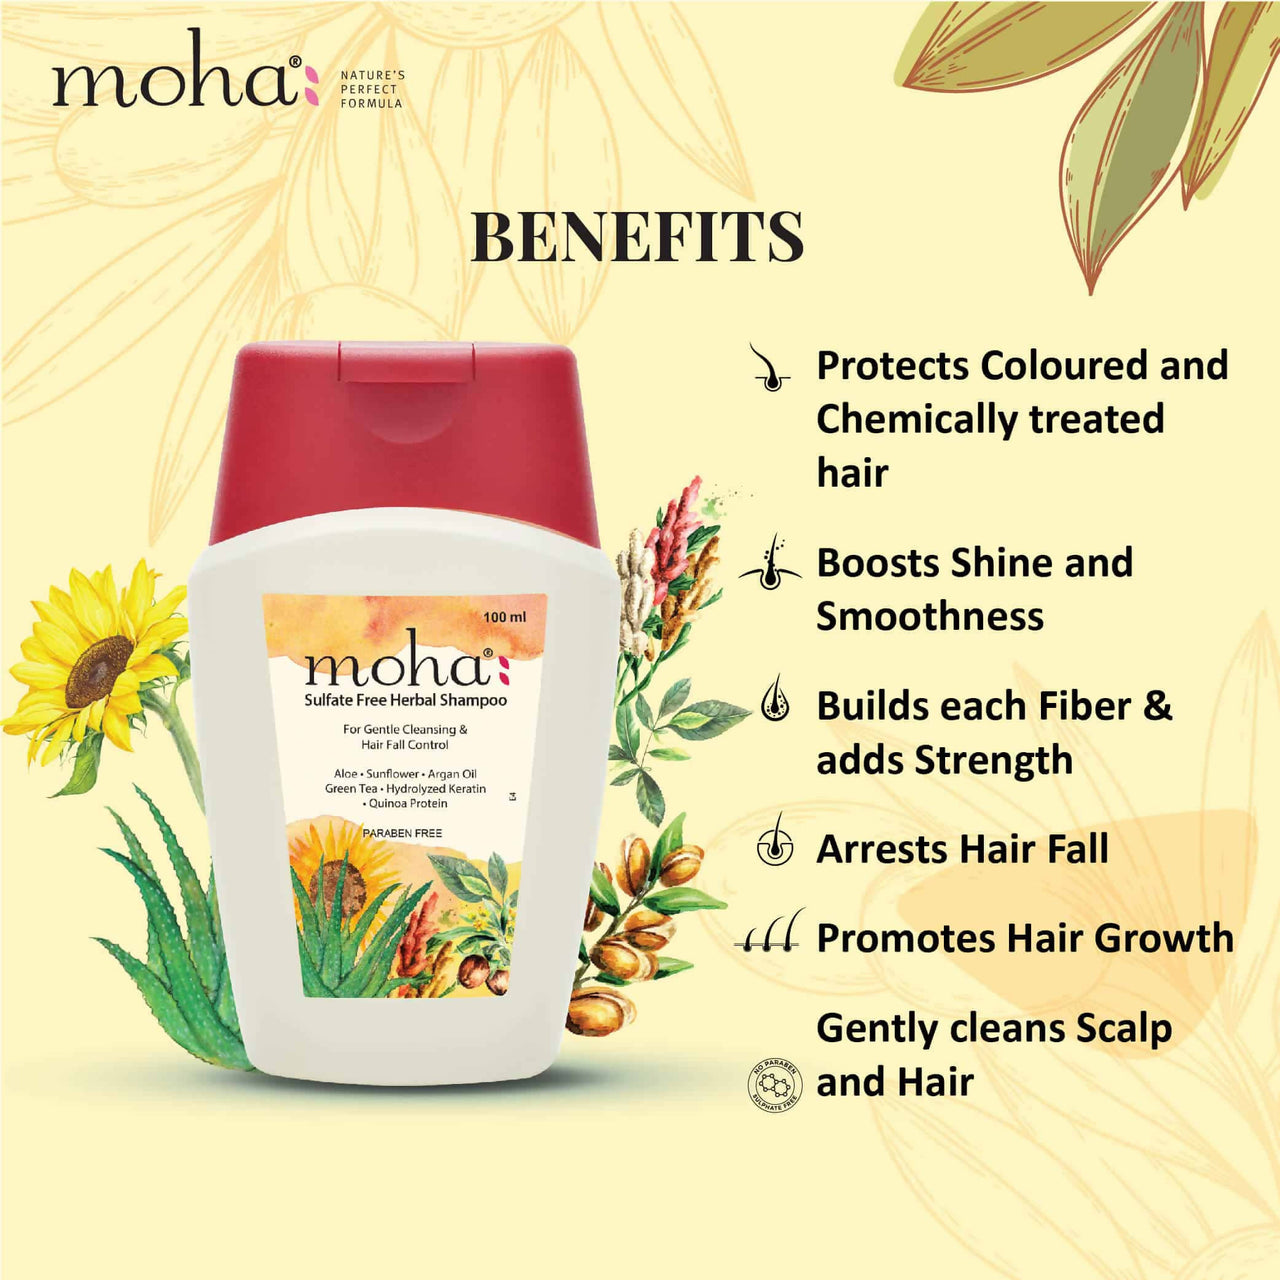 Moha Sulfate-Free Herbal Shampoo benefits